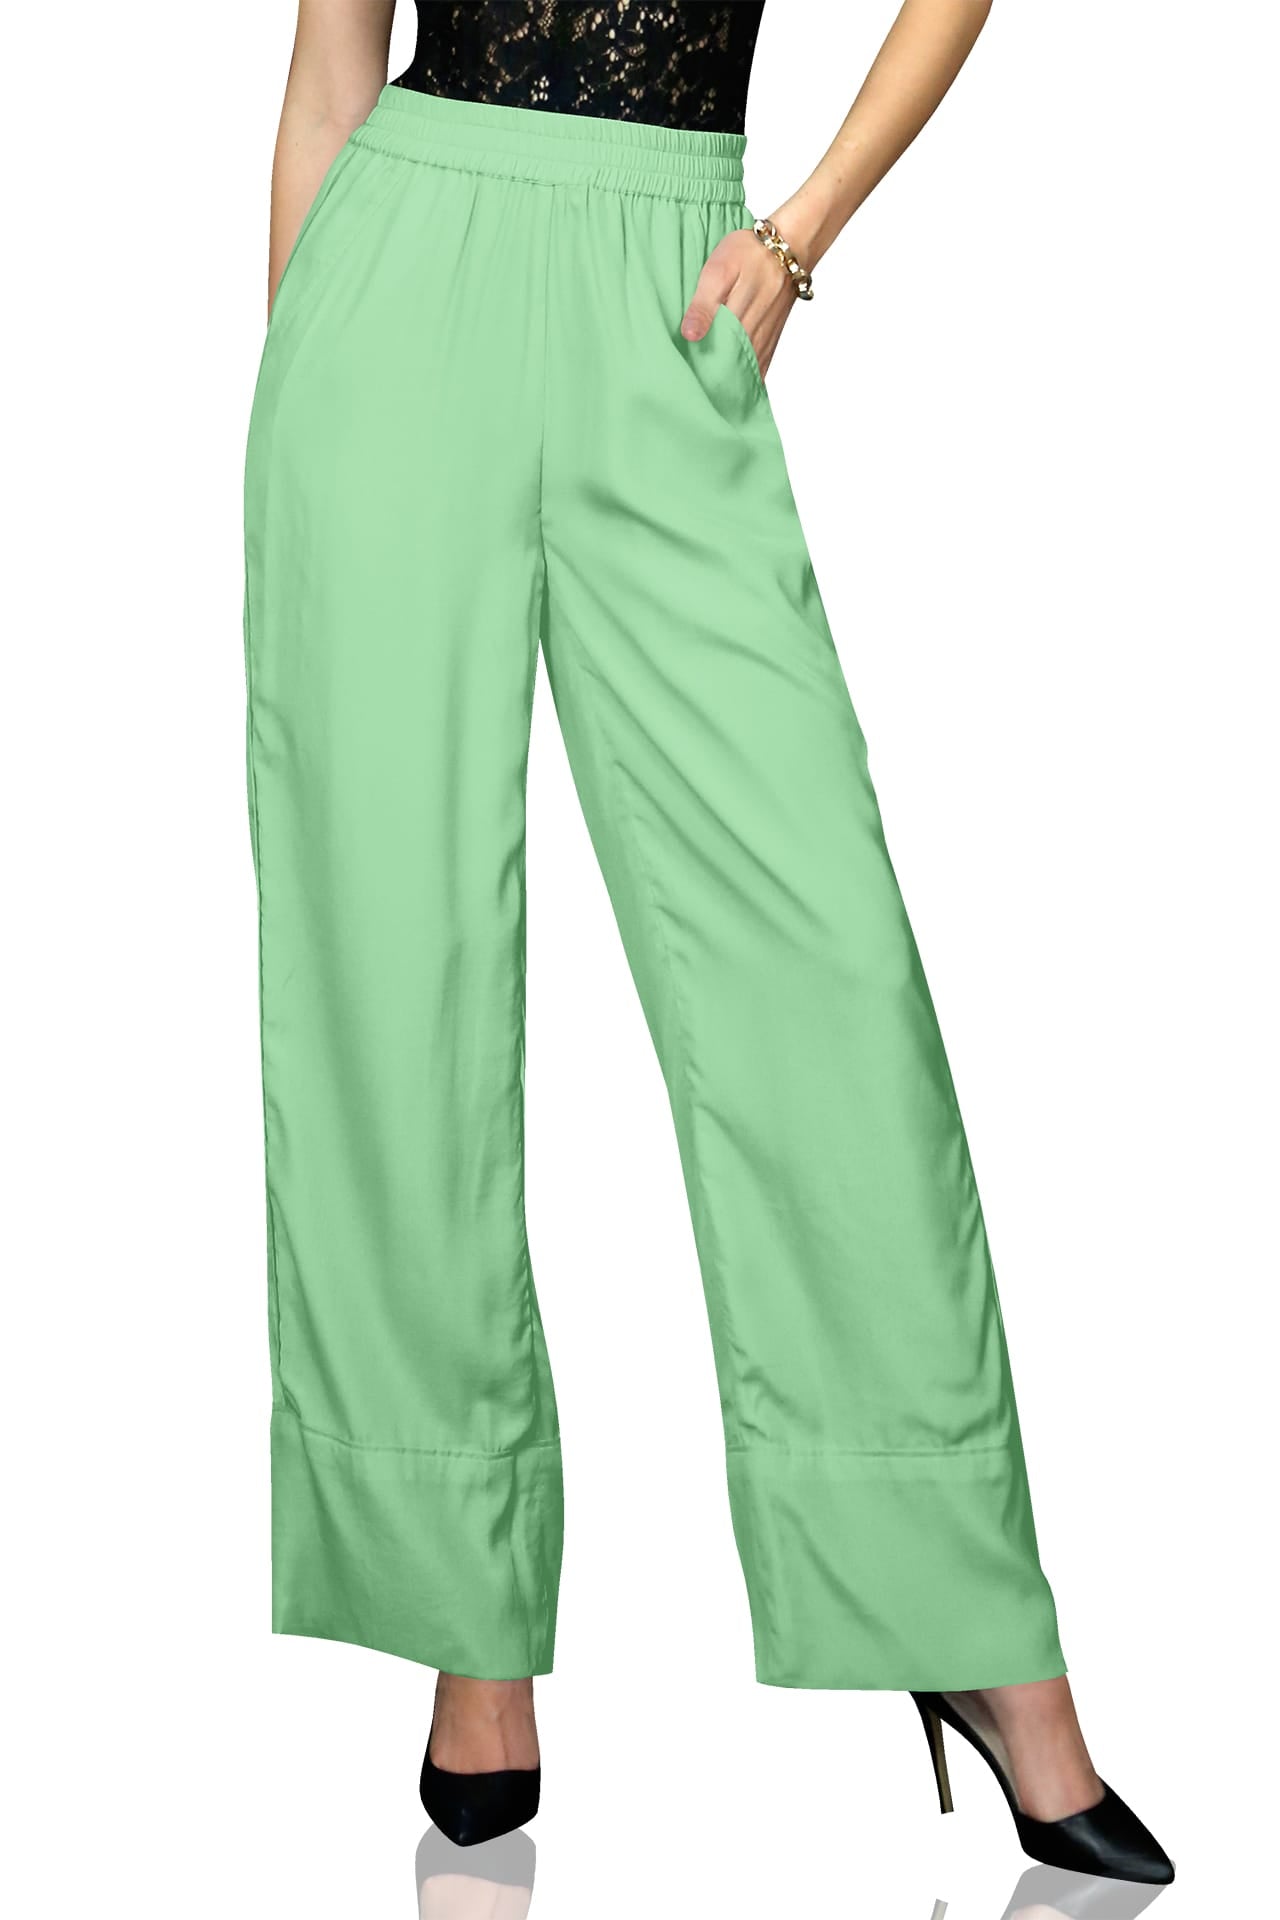 "wide leg plazzo pants" "straight leg pull on pants" "Kyle X Shahida" "green dress pants womens"